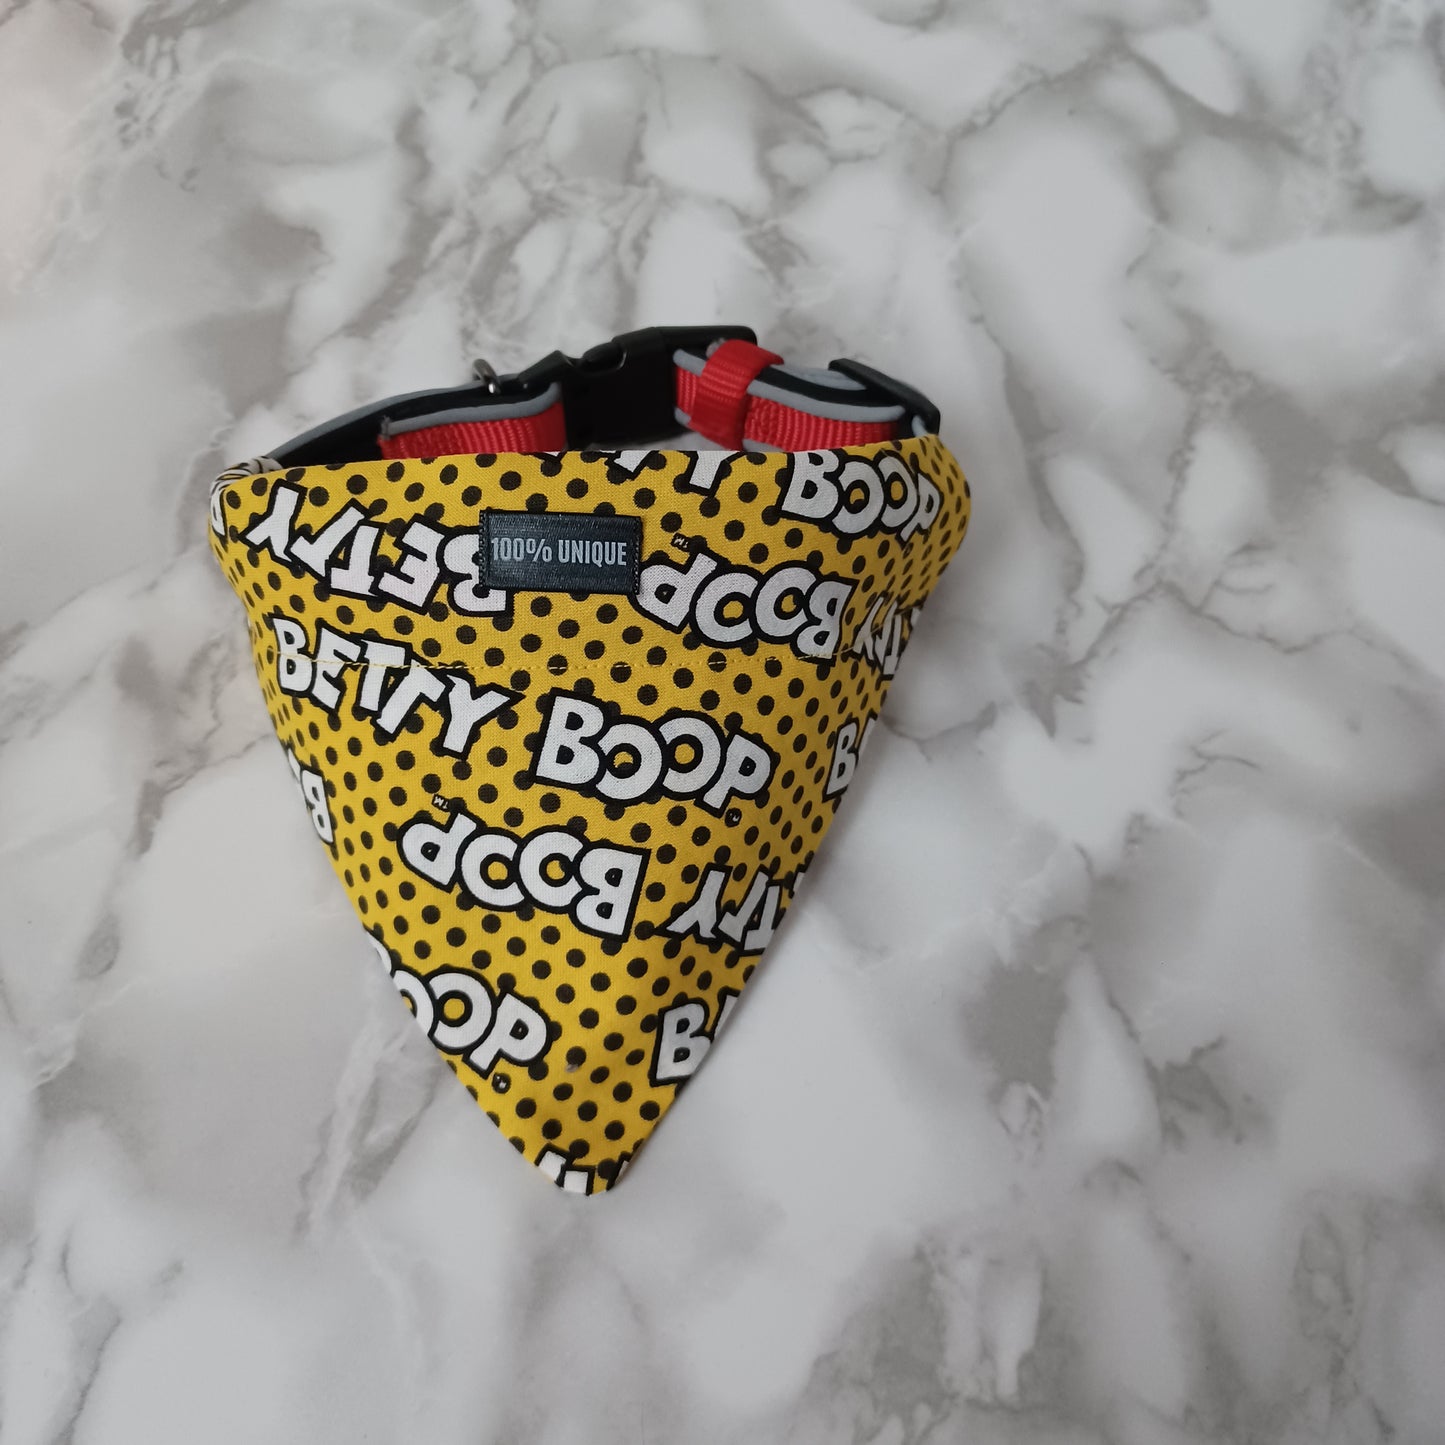 Modèle B-Chat et chien-Foulard par-dessus le collier-Jaune Betty Boop/Bandana over the collar-Yellow Betty Boop